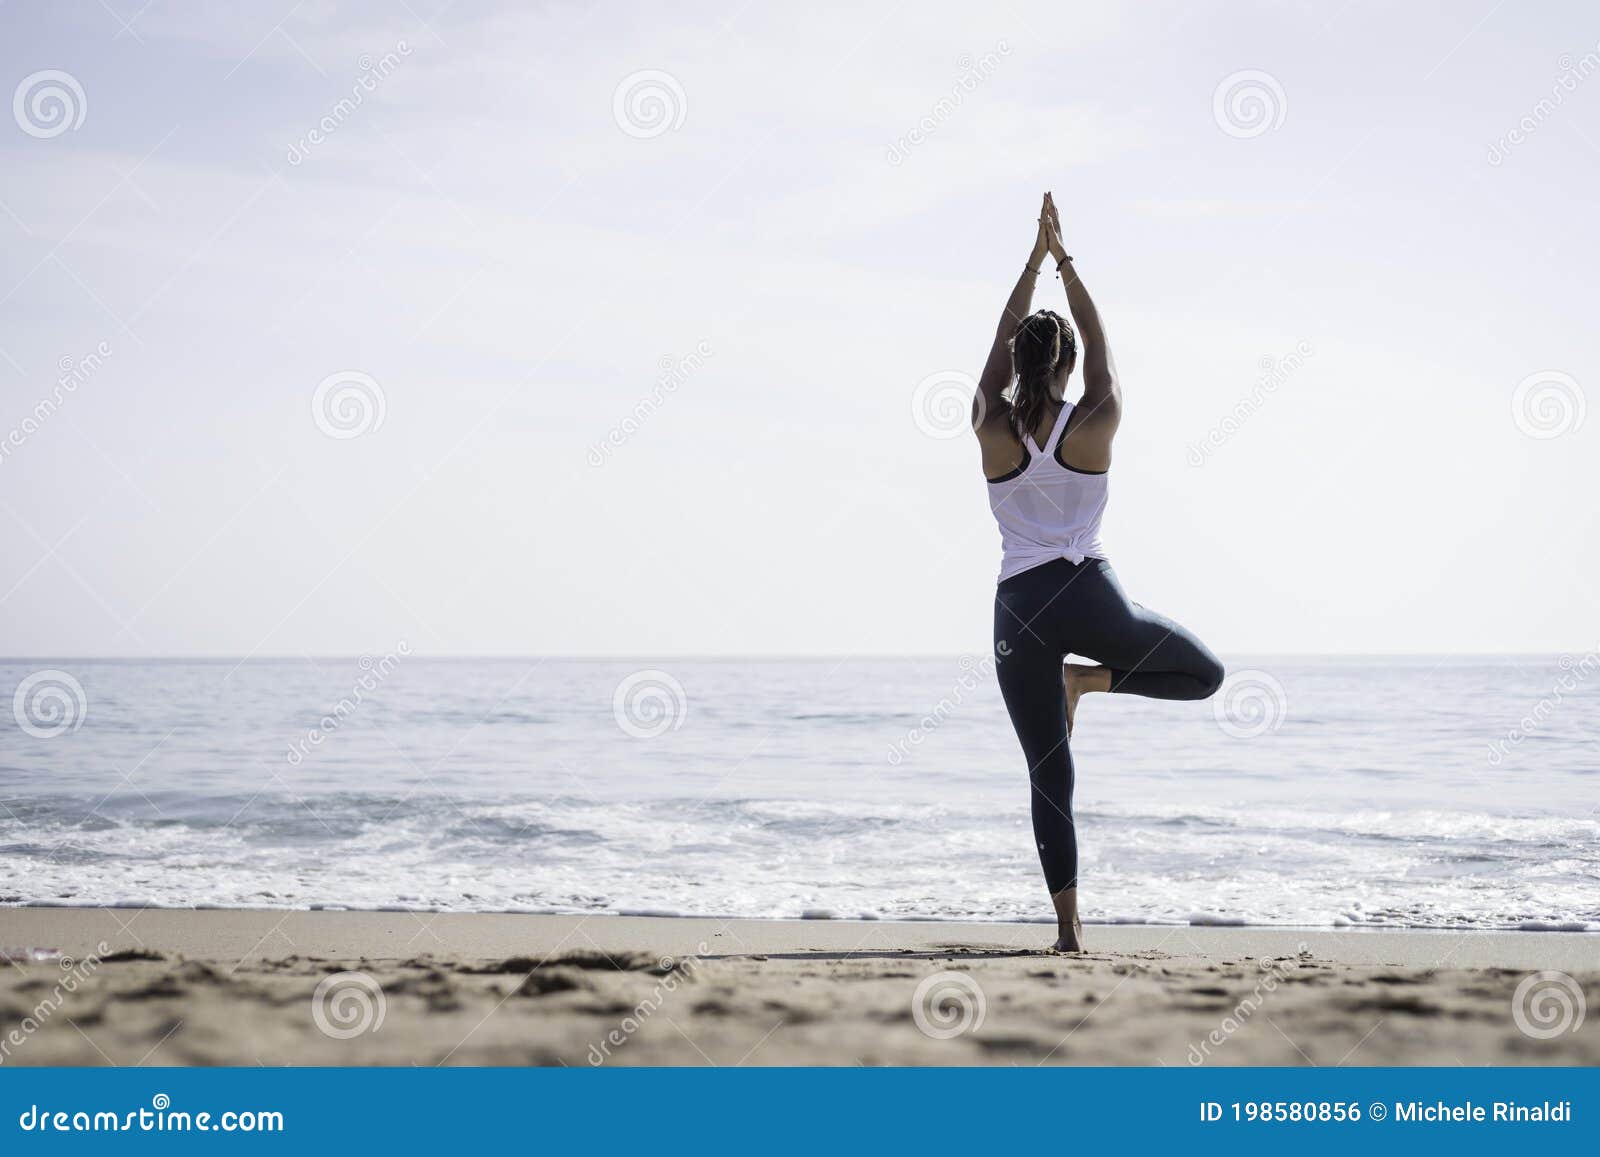 https://thumbs.dreamstime.com/z/sporty-young-woman-doing-yoga-exercises-using-gym-mat-along-beach-lisbon-portugal-playful-working-as-freelance-teacher-198580856.jpg